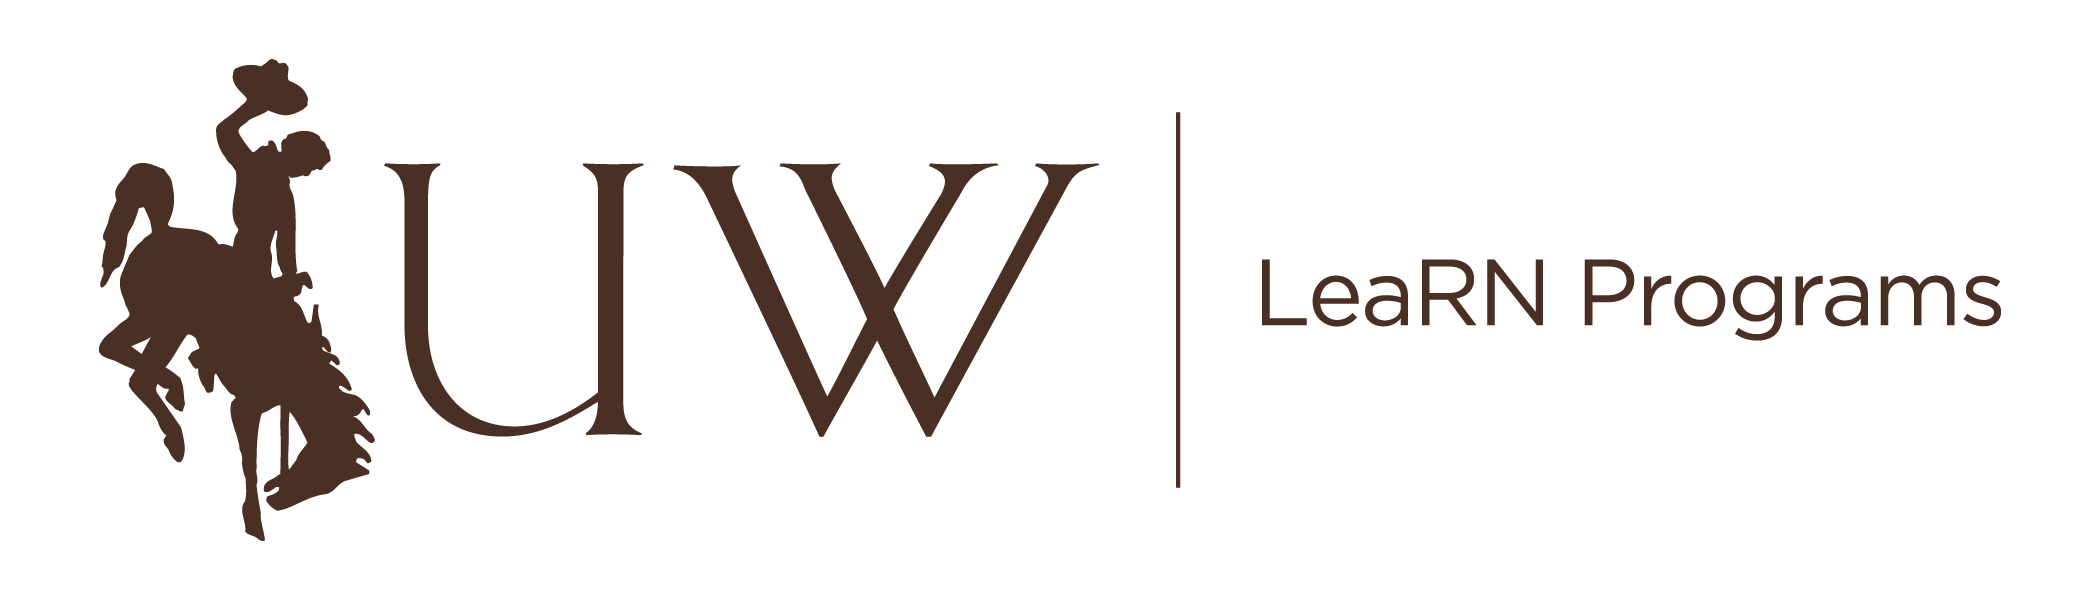 University of Wyoming LeaRN logo